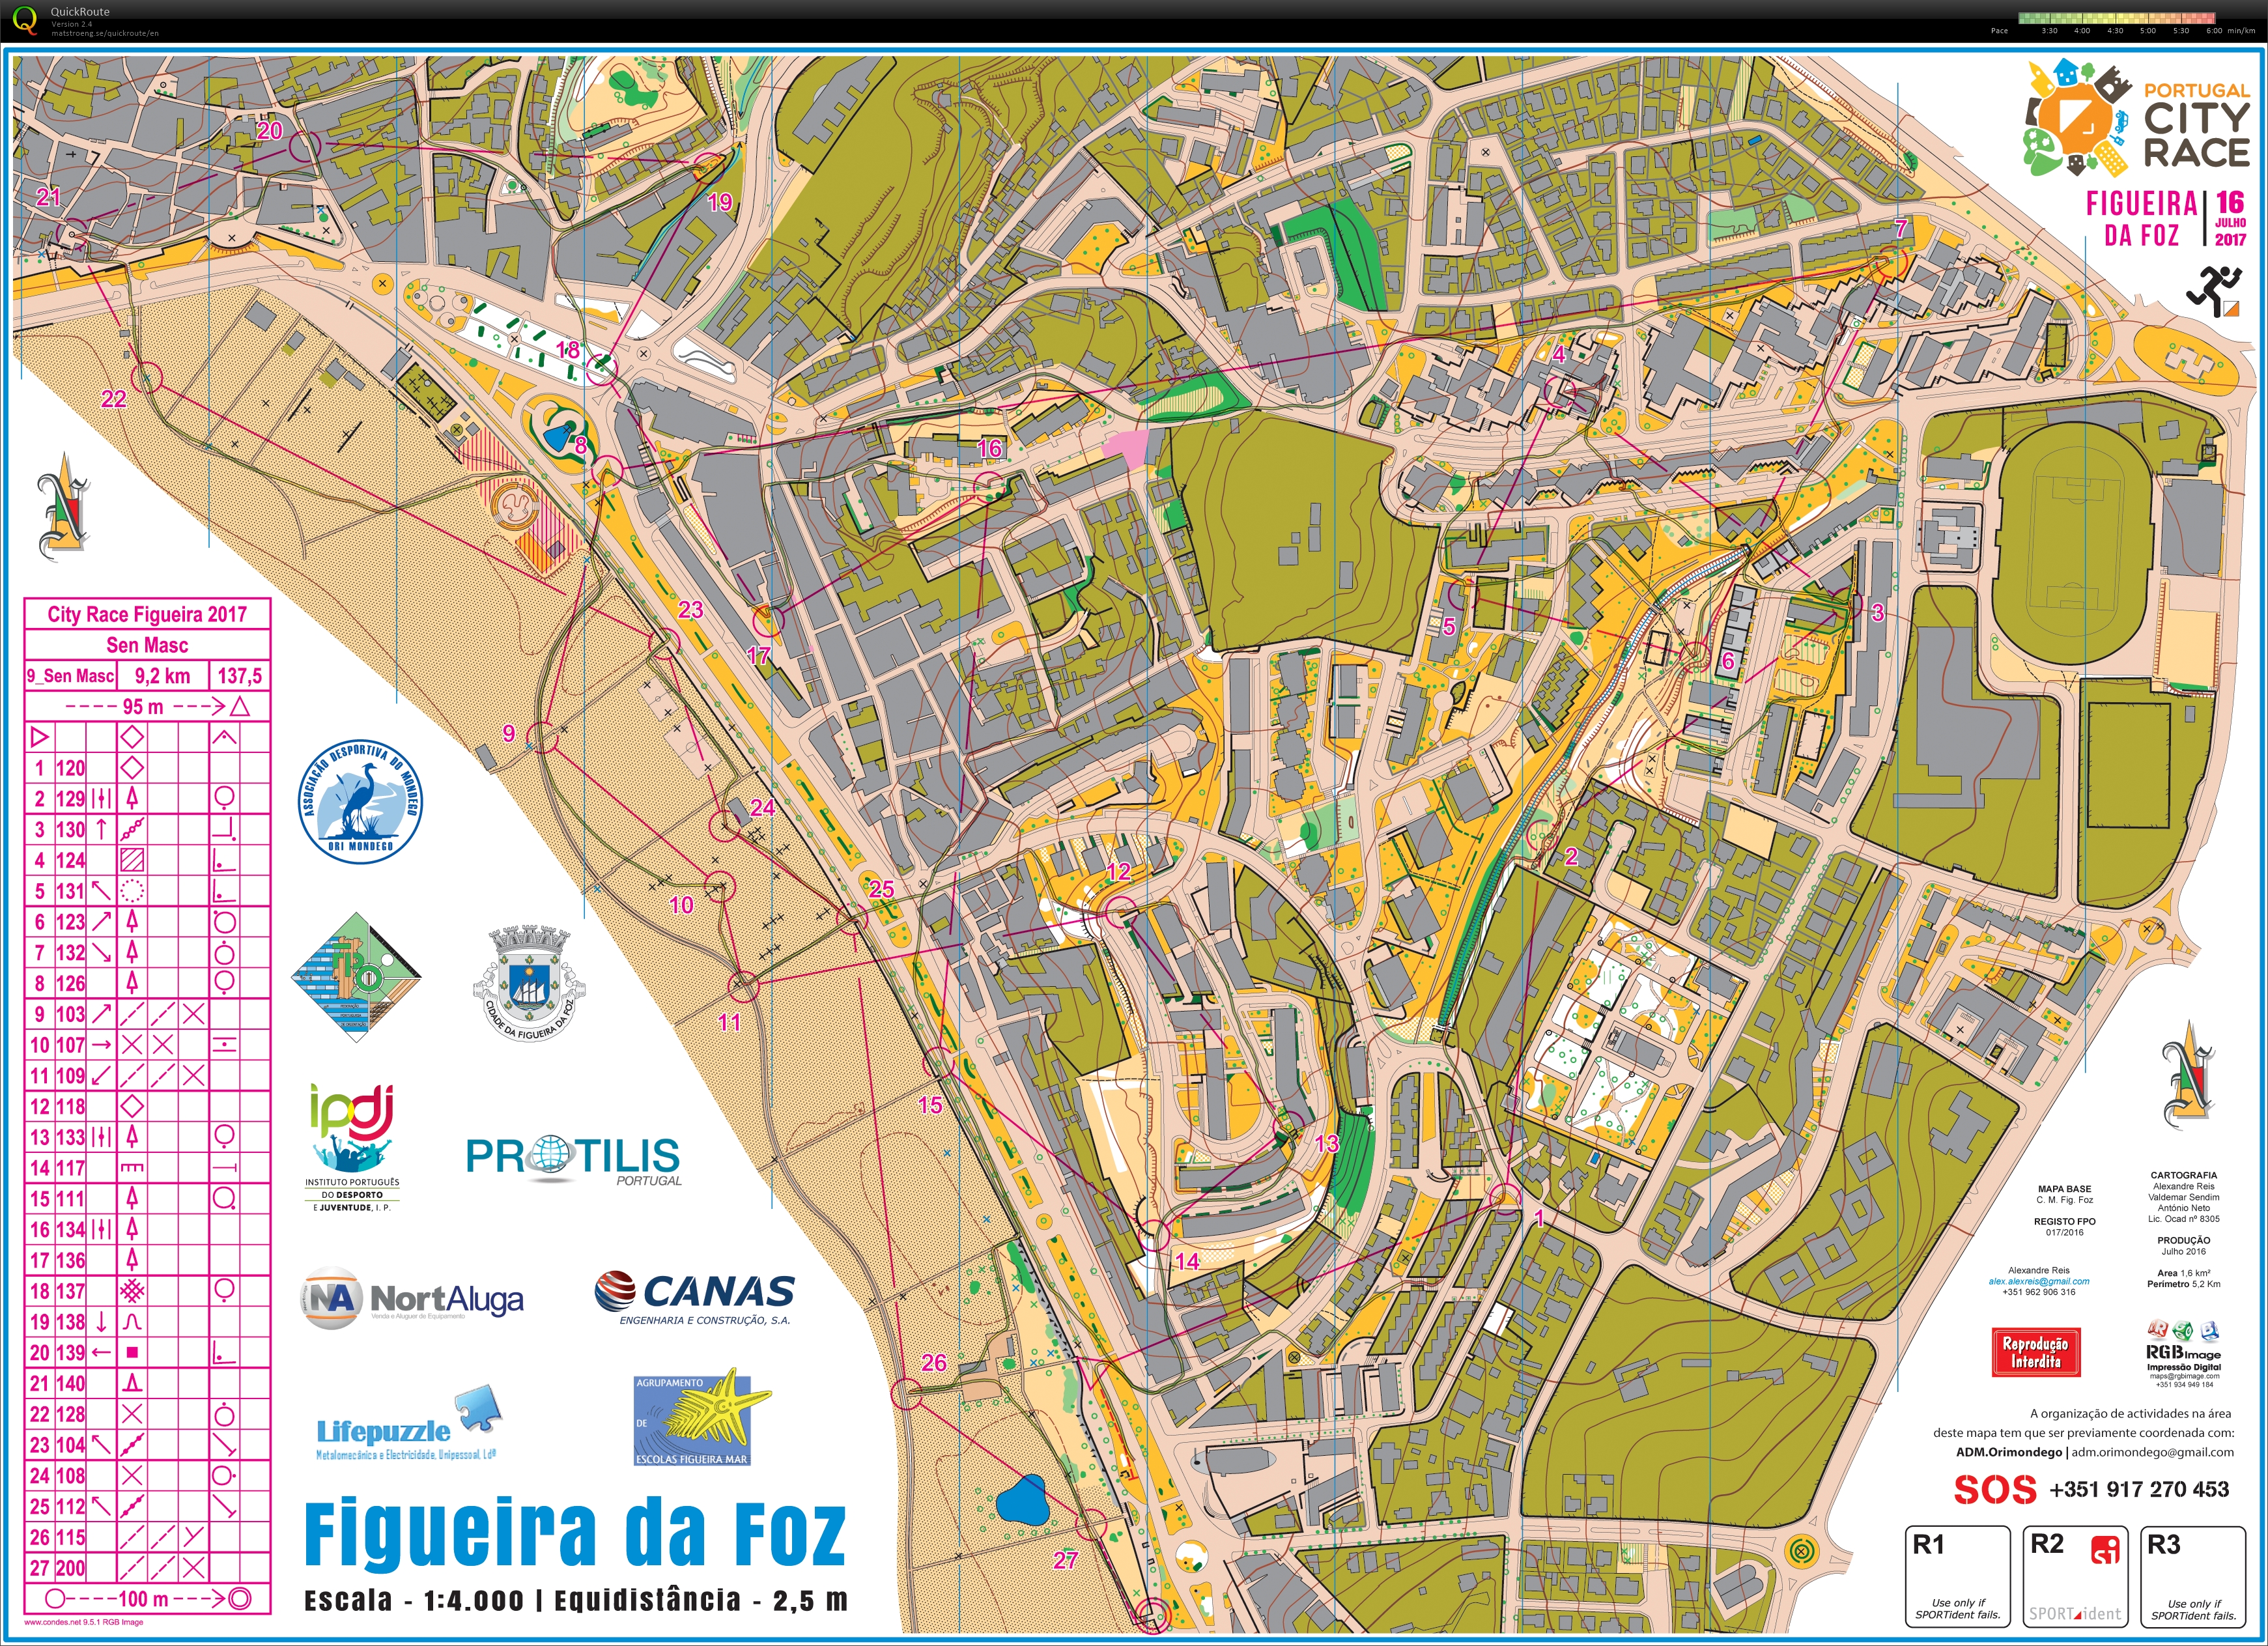 City Race Figueira da Foz 9km (15-07-2017)